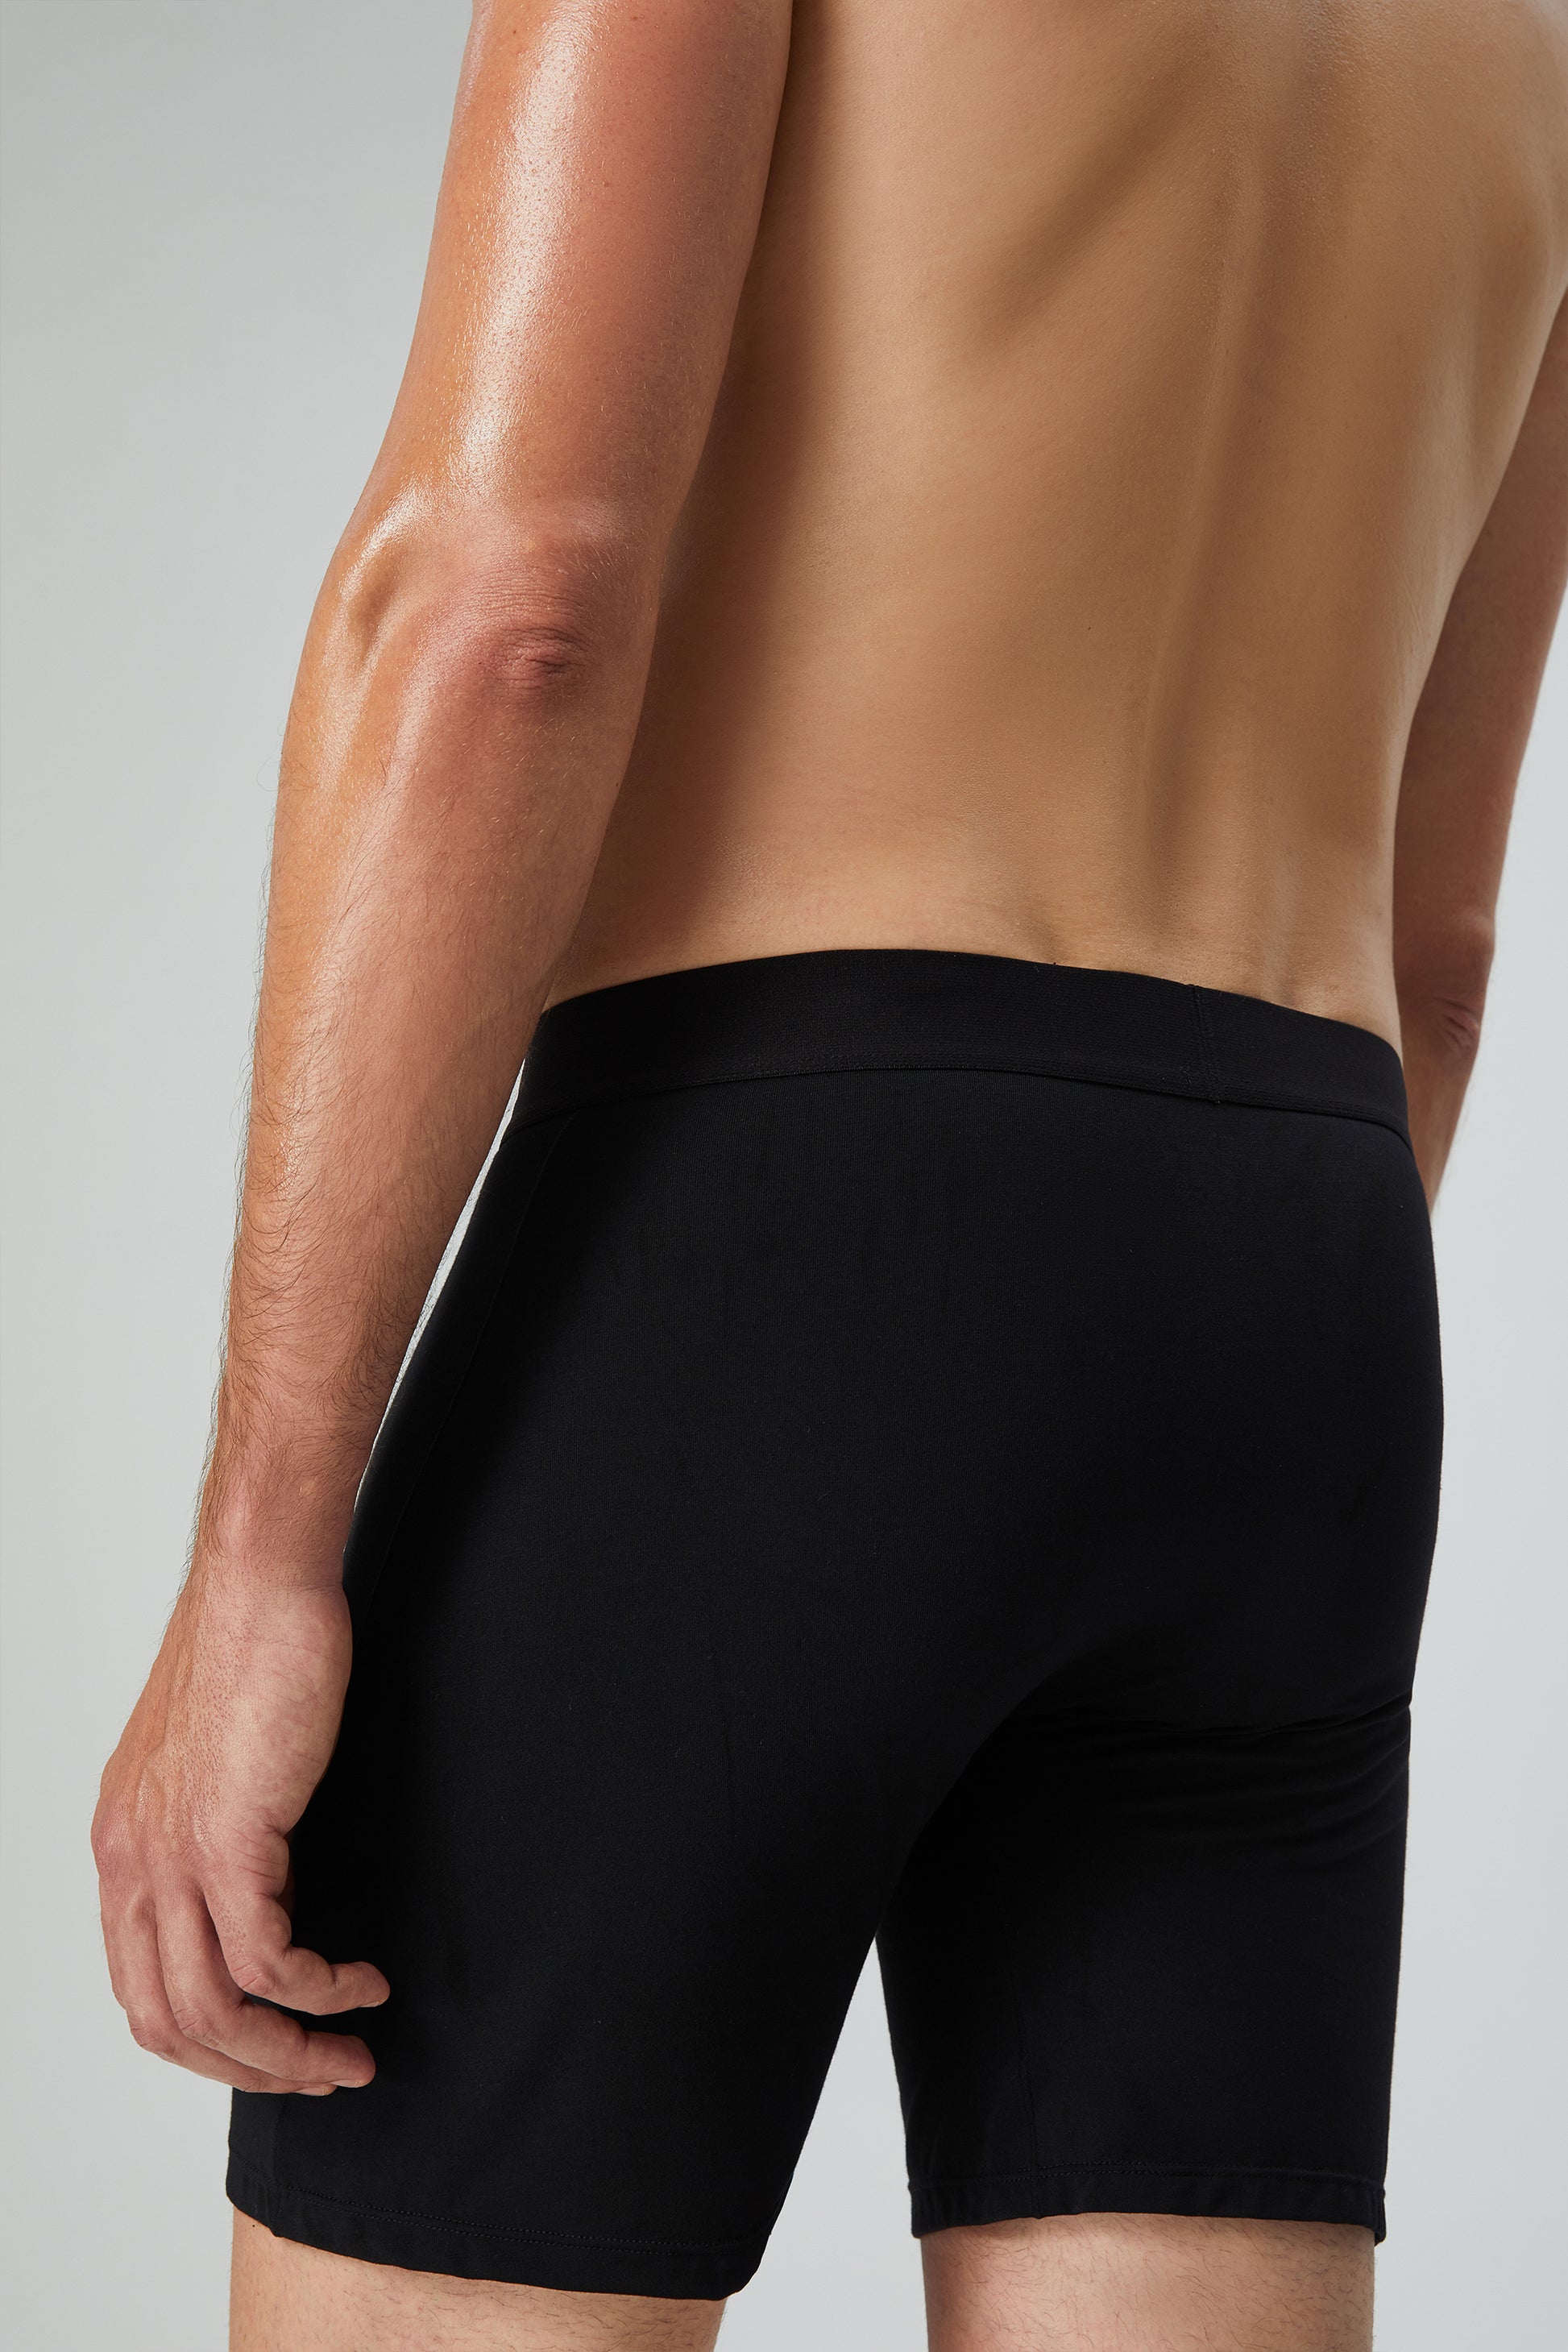 Natural Feelings Mens Underwear Boxer Briefs 3 Pack Premium Modal Men